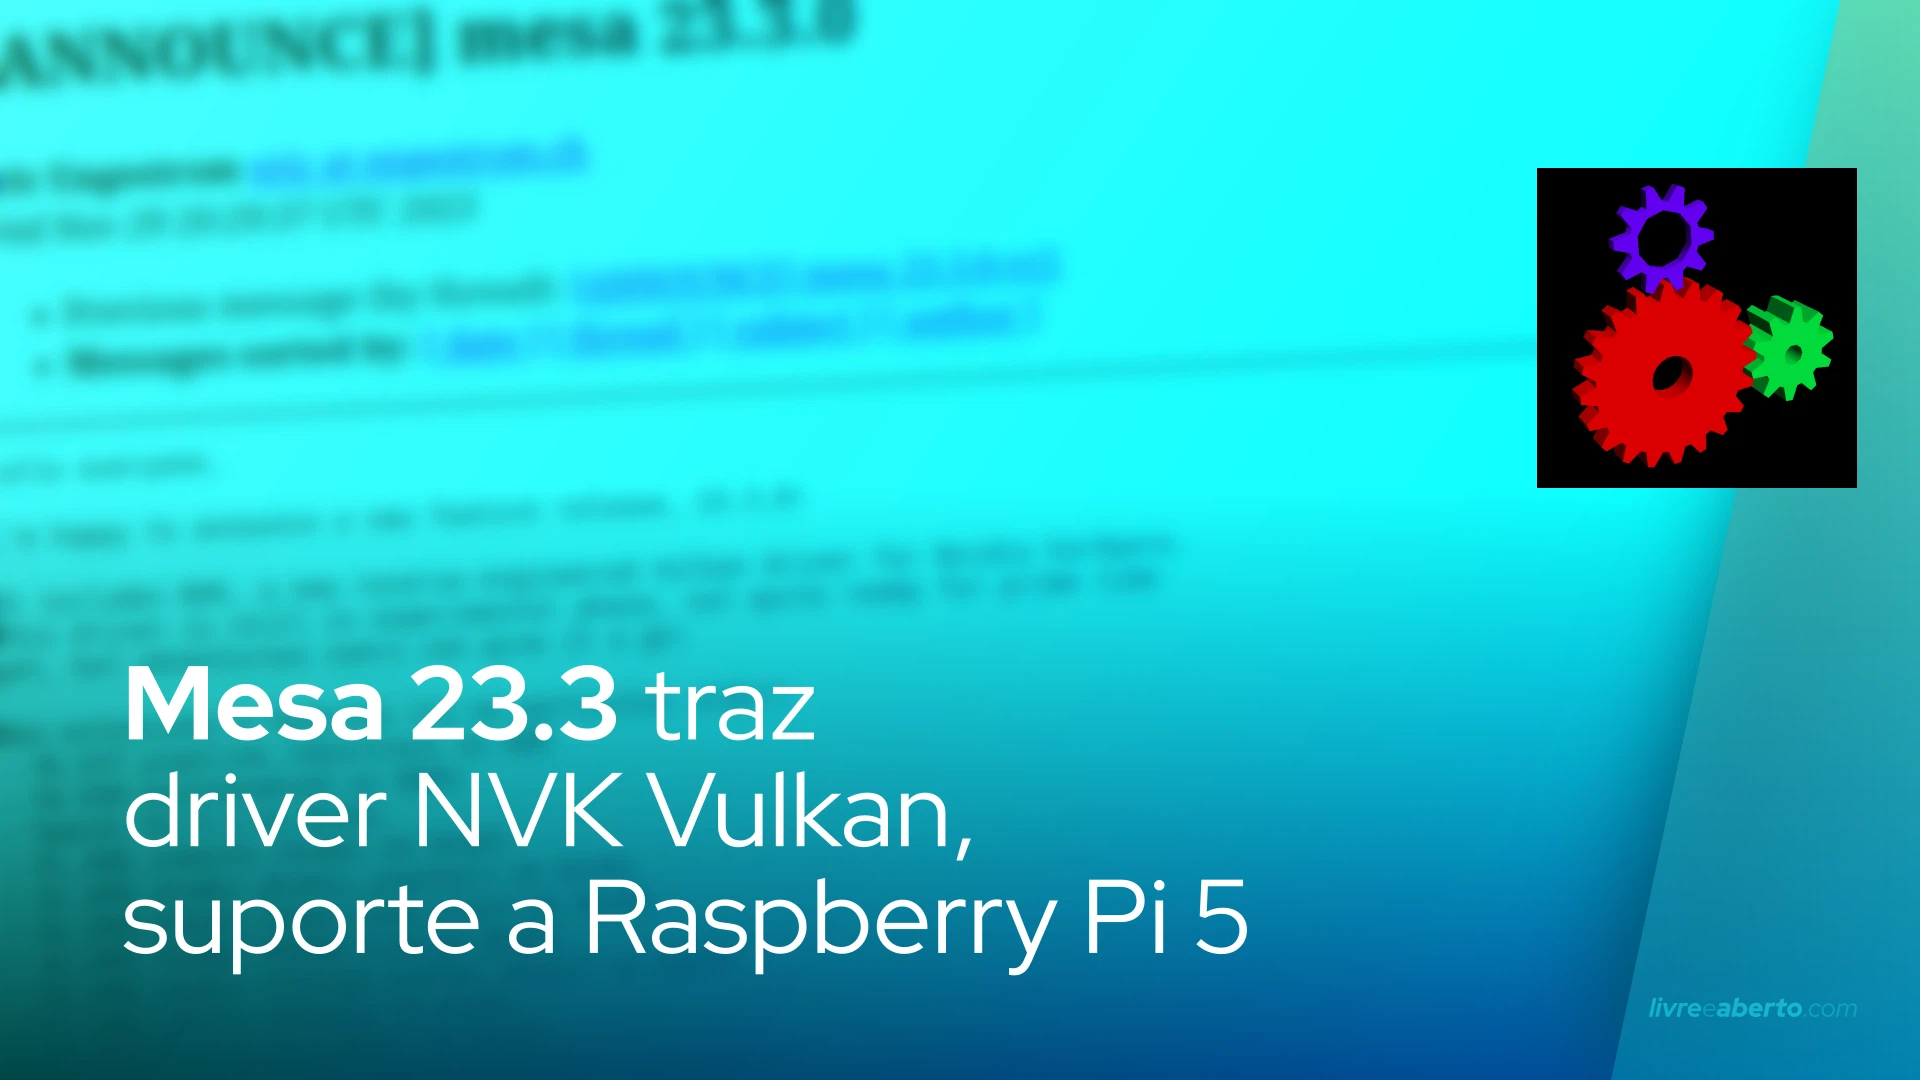 Mesa 23.3 traz driver NVK Vulkan, suporte a Raspberry Pi 5